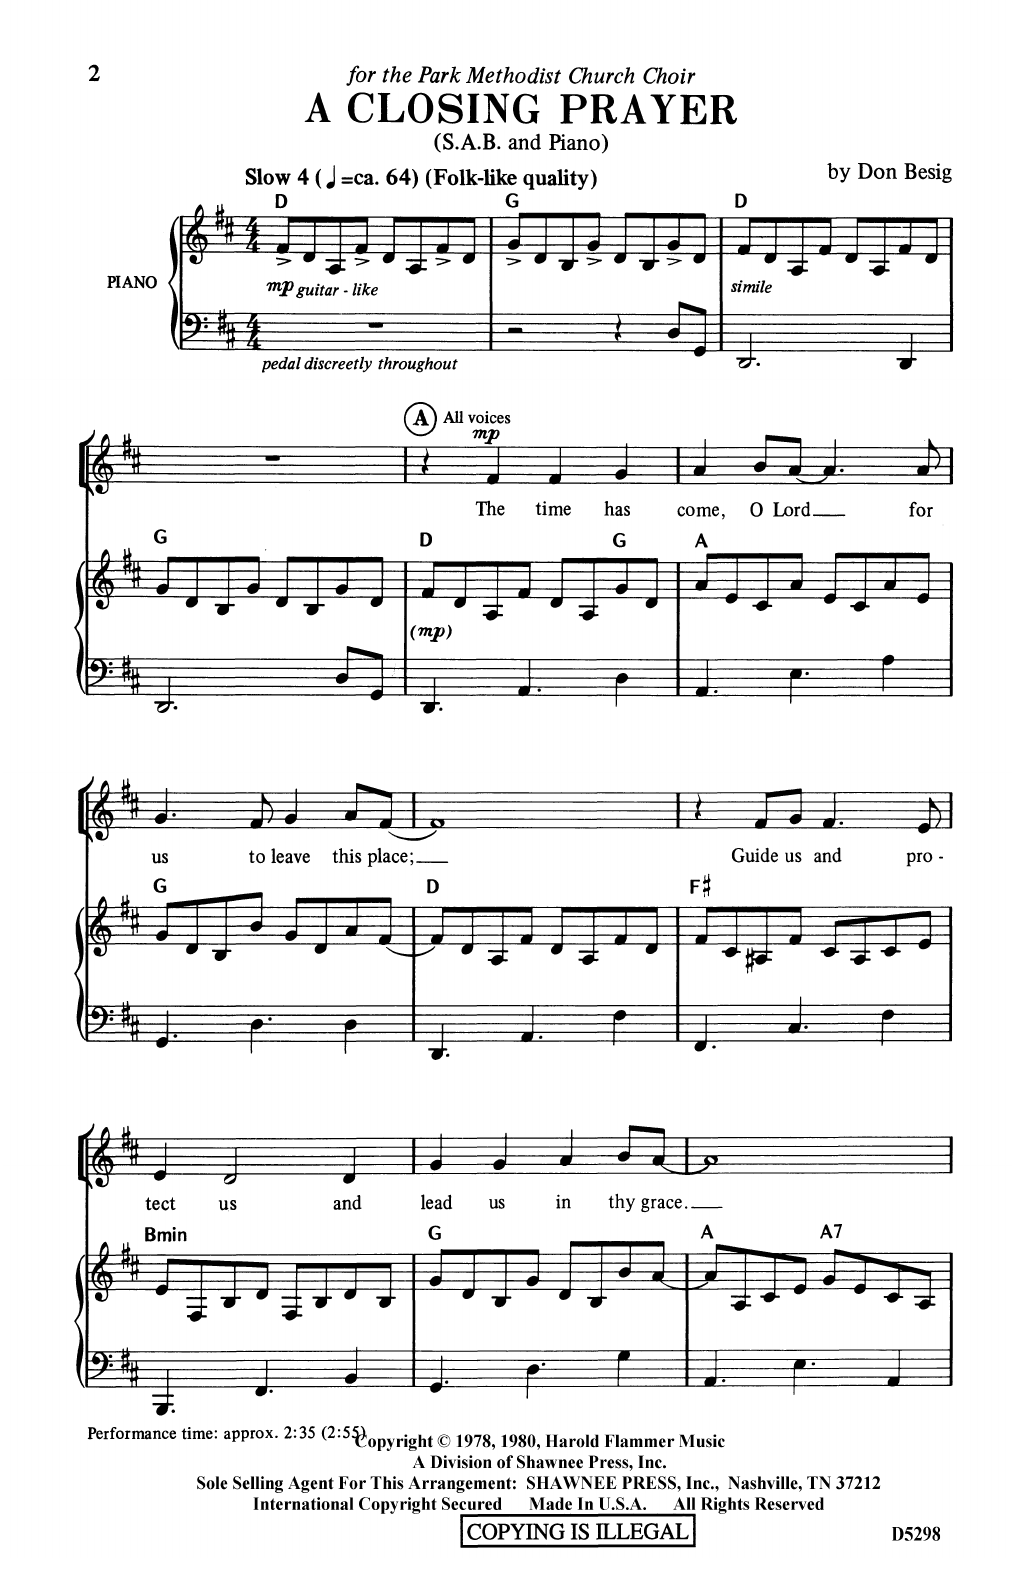 Don Besig A Closing Prayer Sheet Music Notes & Chords for SATB Choir - Download or Print PDF